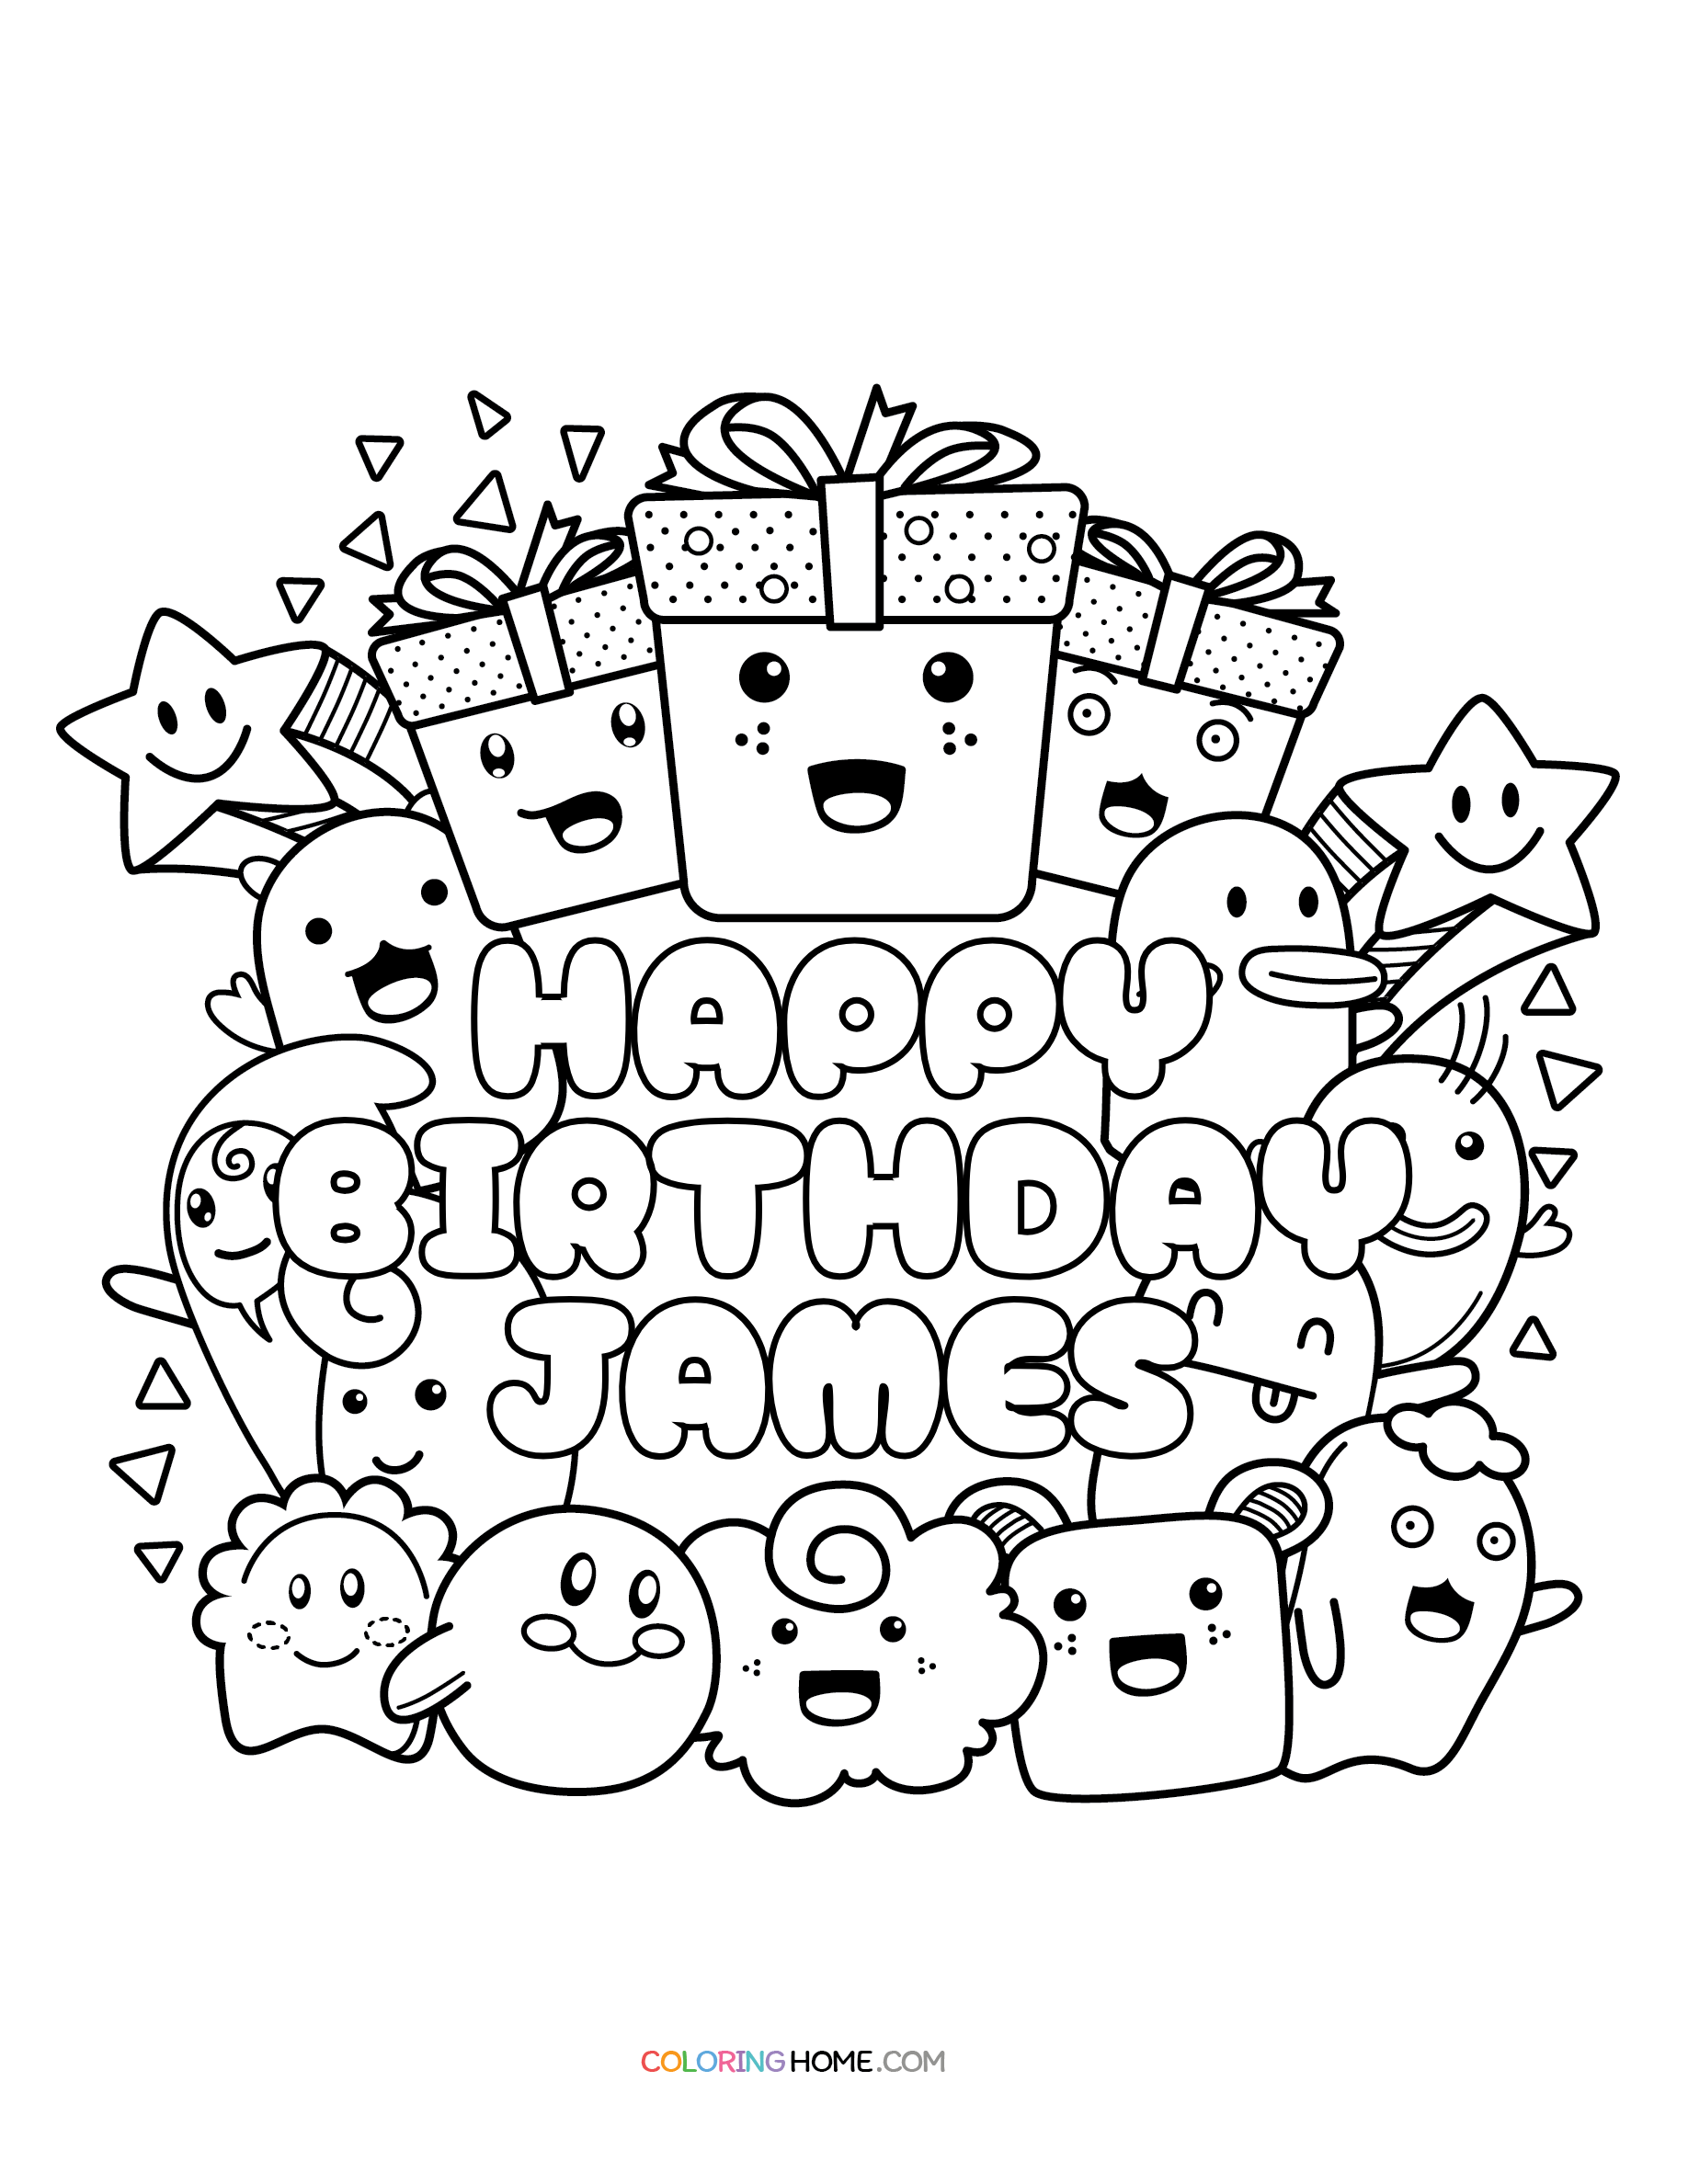 Happy Birthday James coloring page